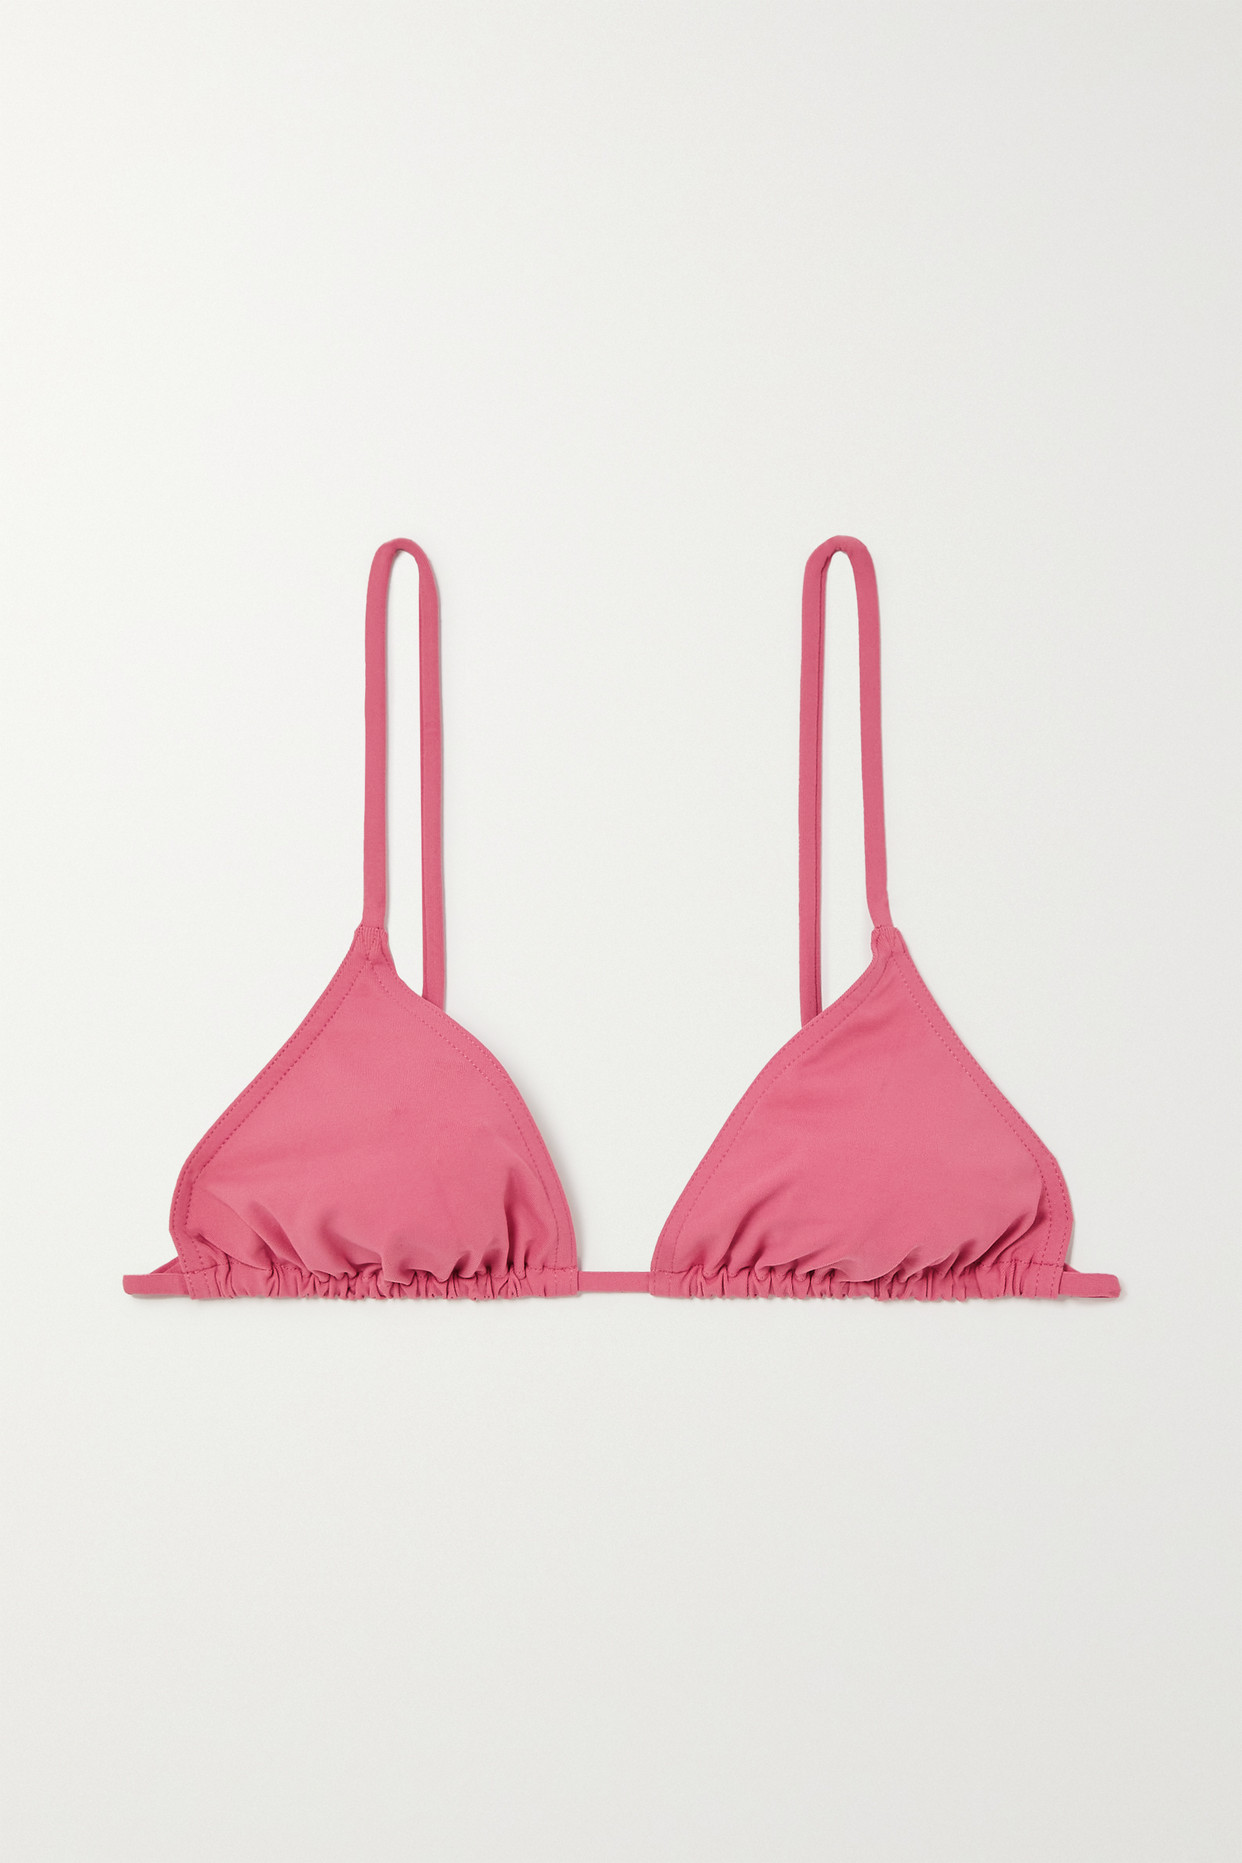 Les Essentiels Mouna Triangle Bikini Top